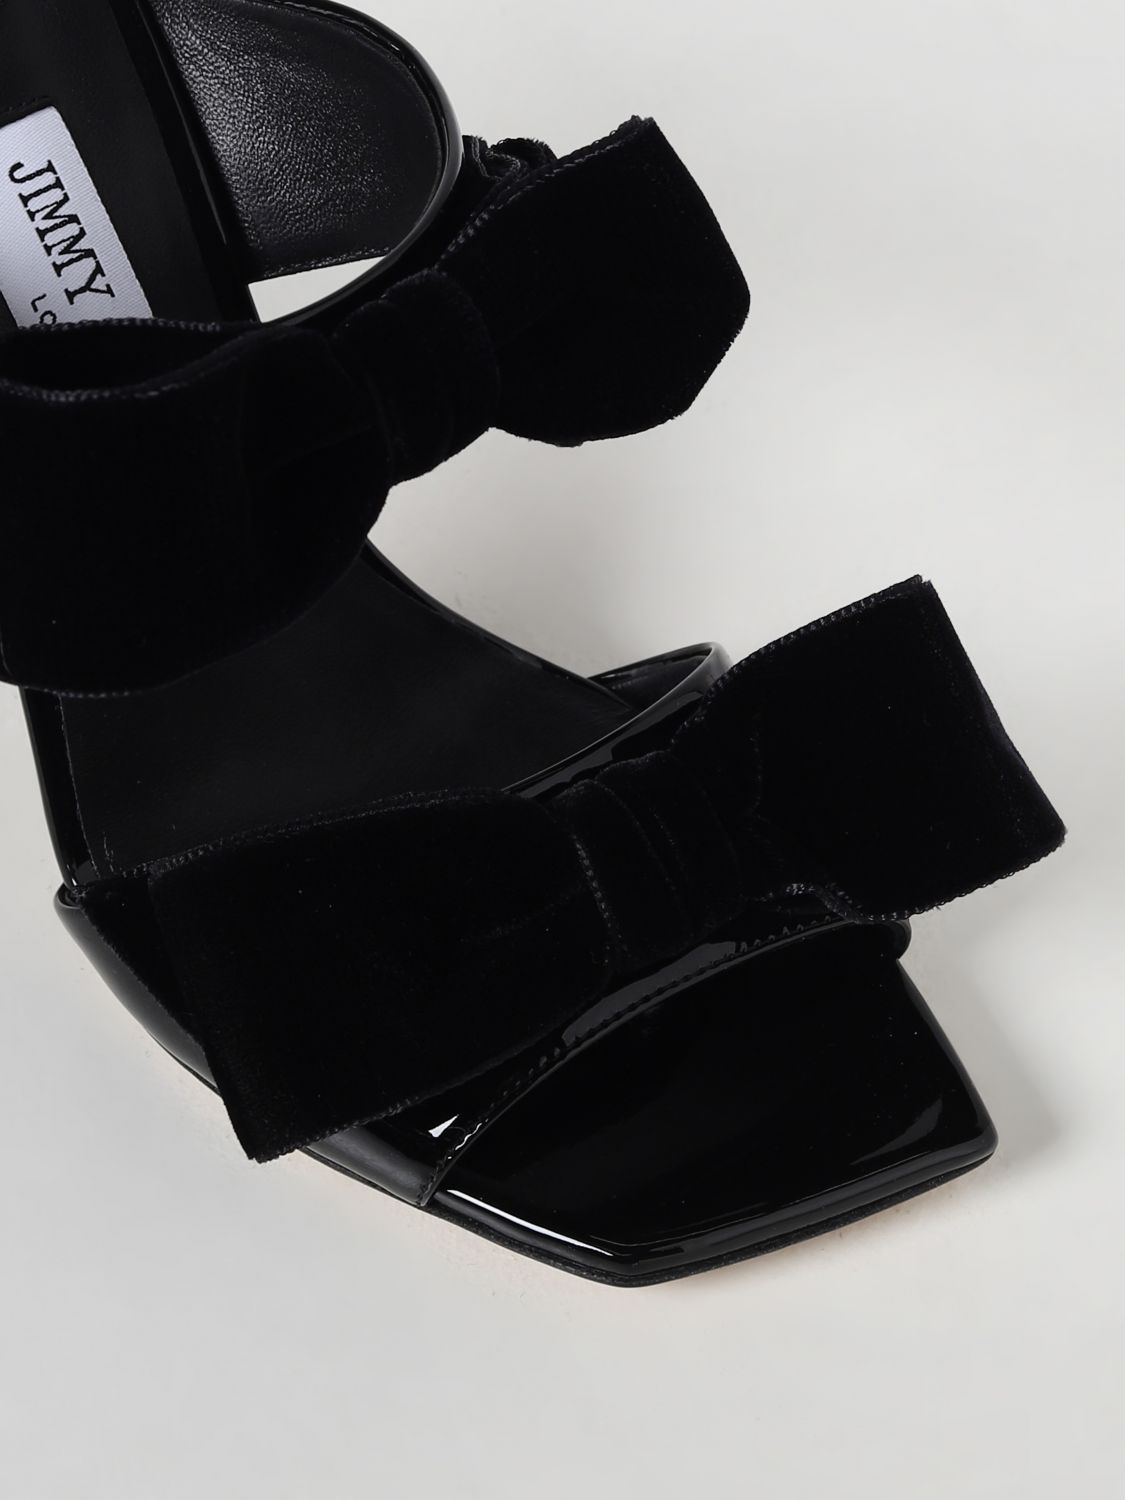 GIÀY JIMMY CHOO Black heeled sandals shoes